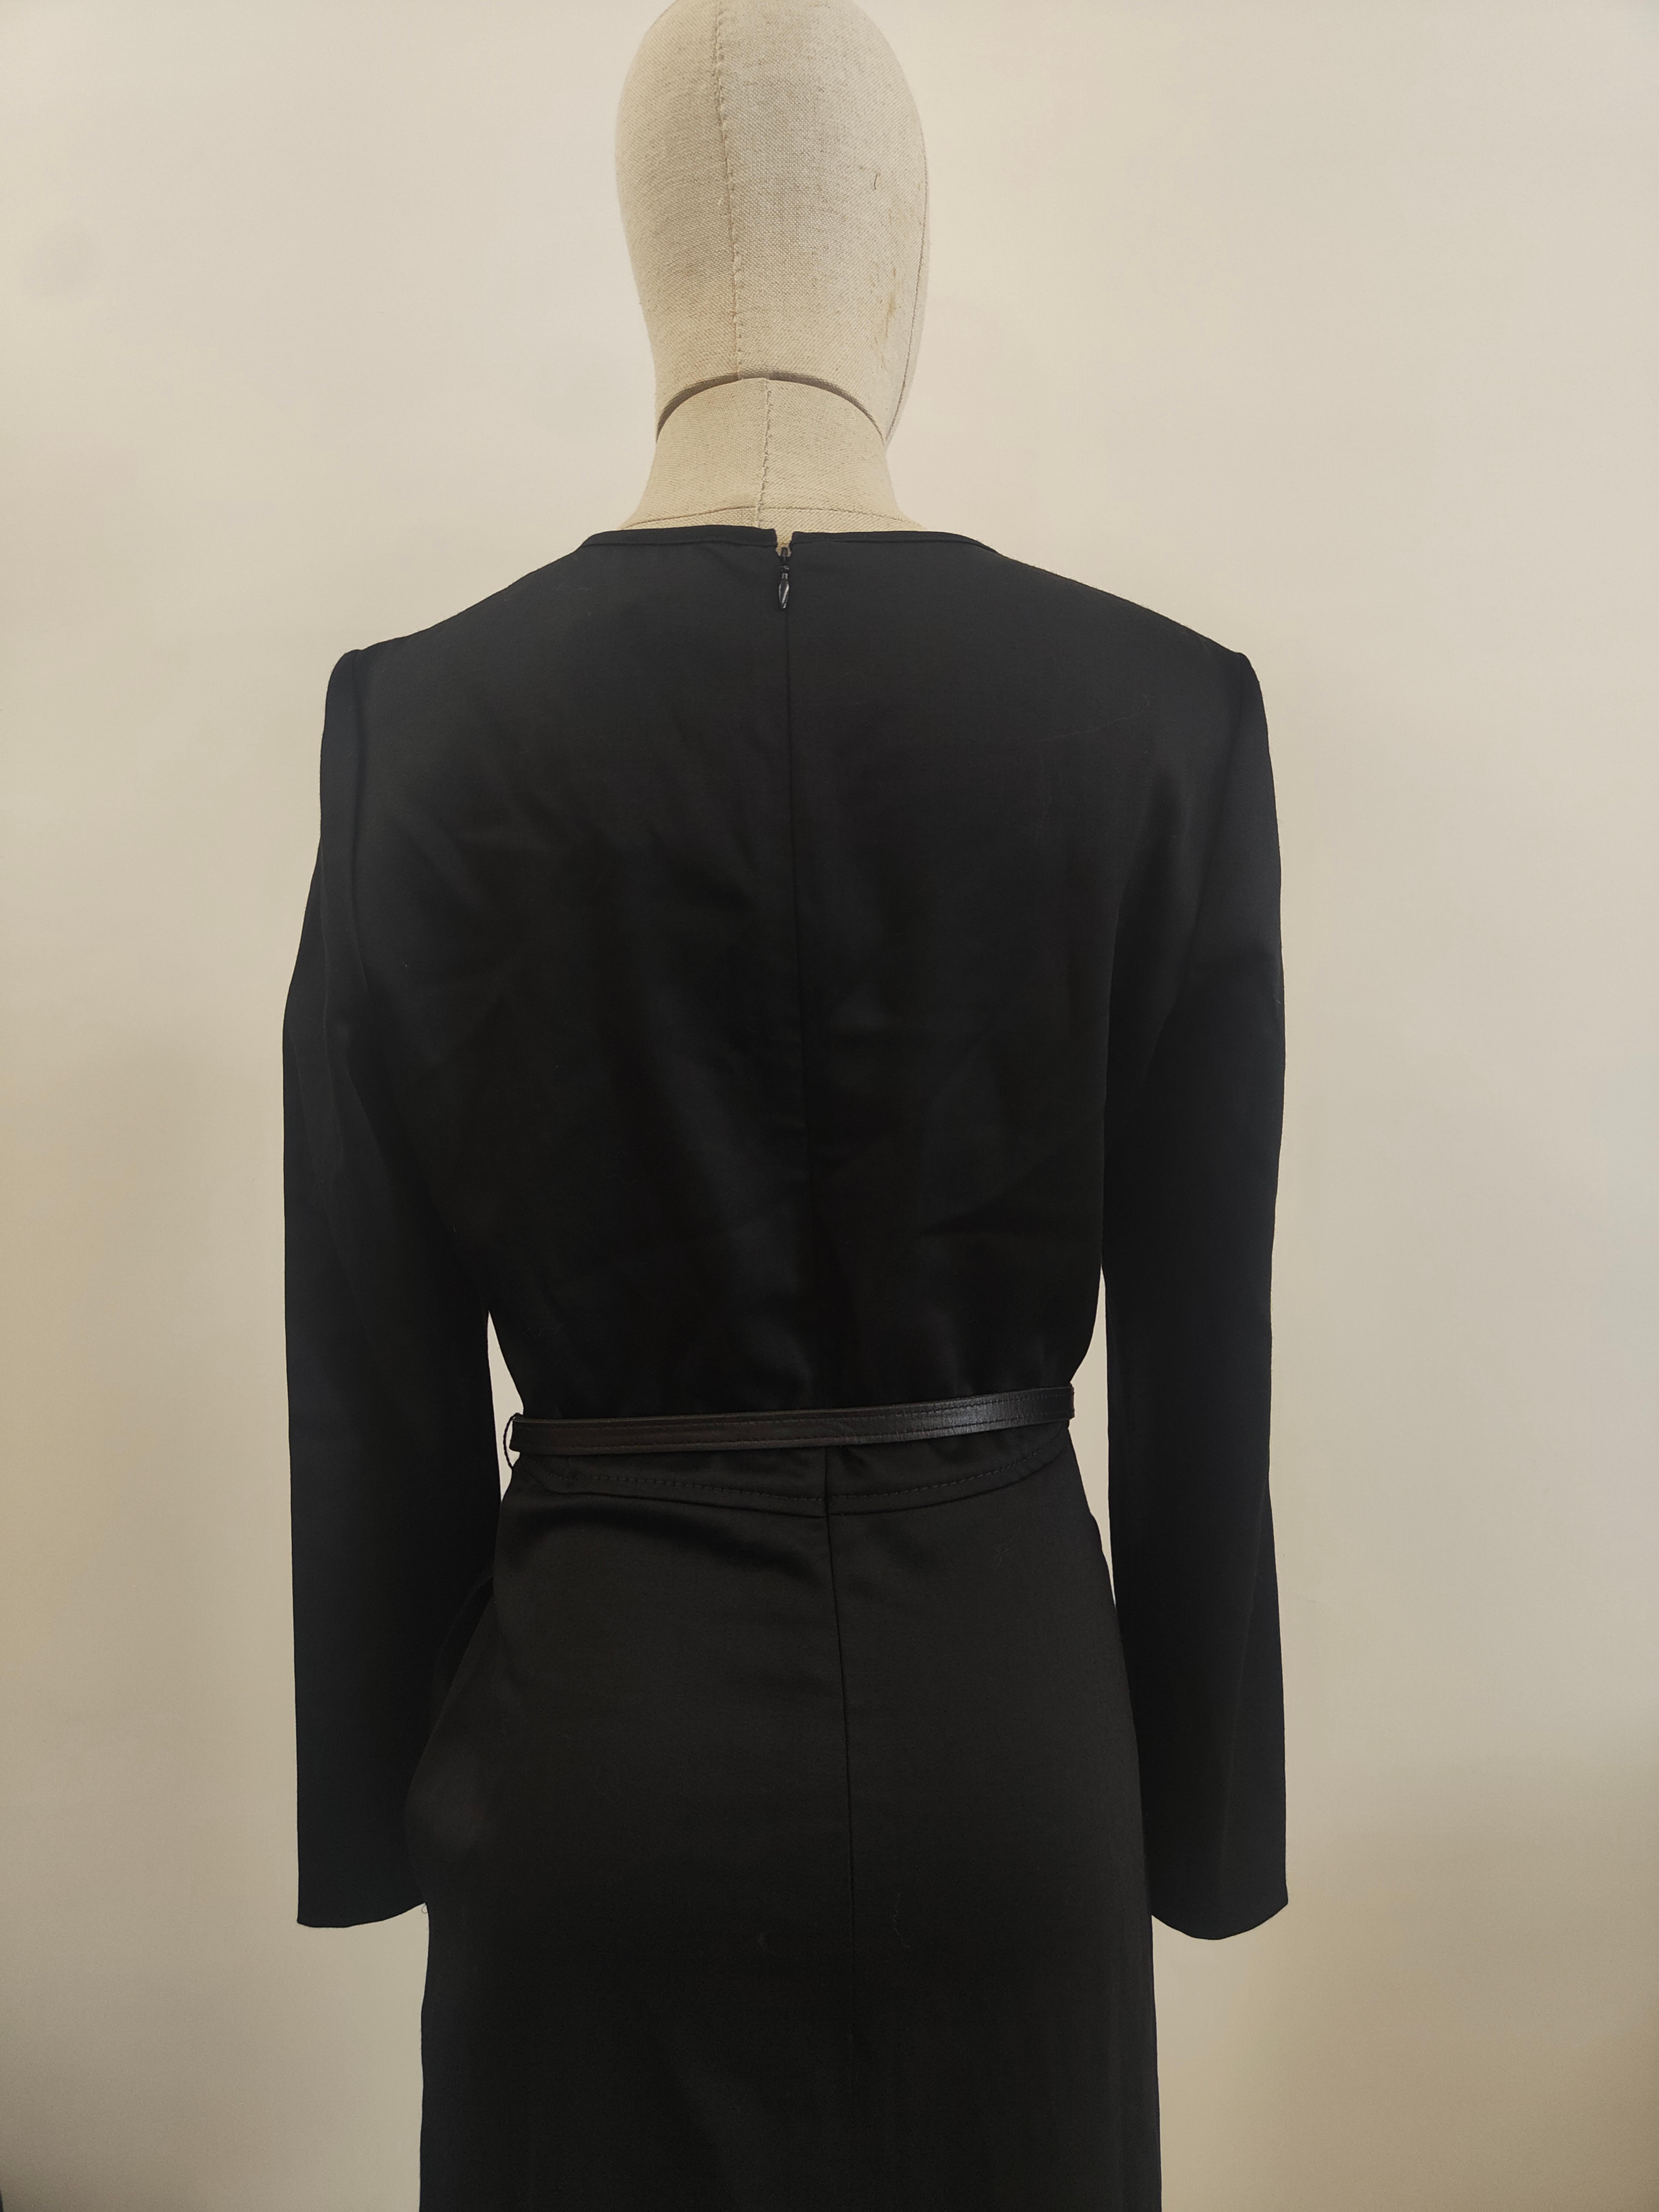 Noir Valentino robe noire vintage NWOT en vente